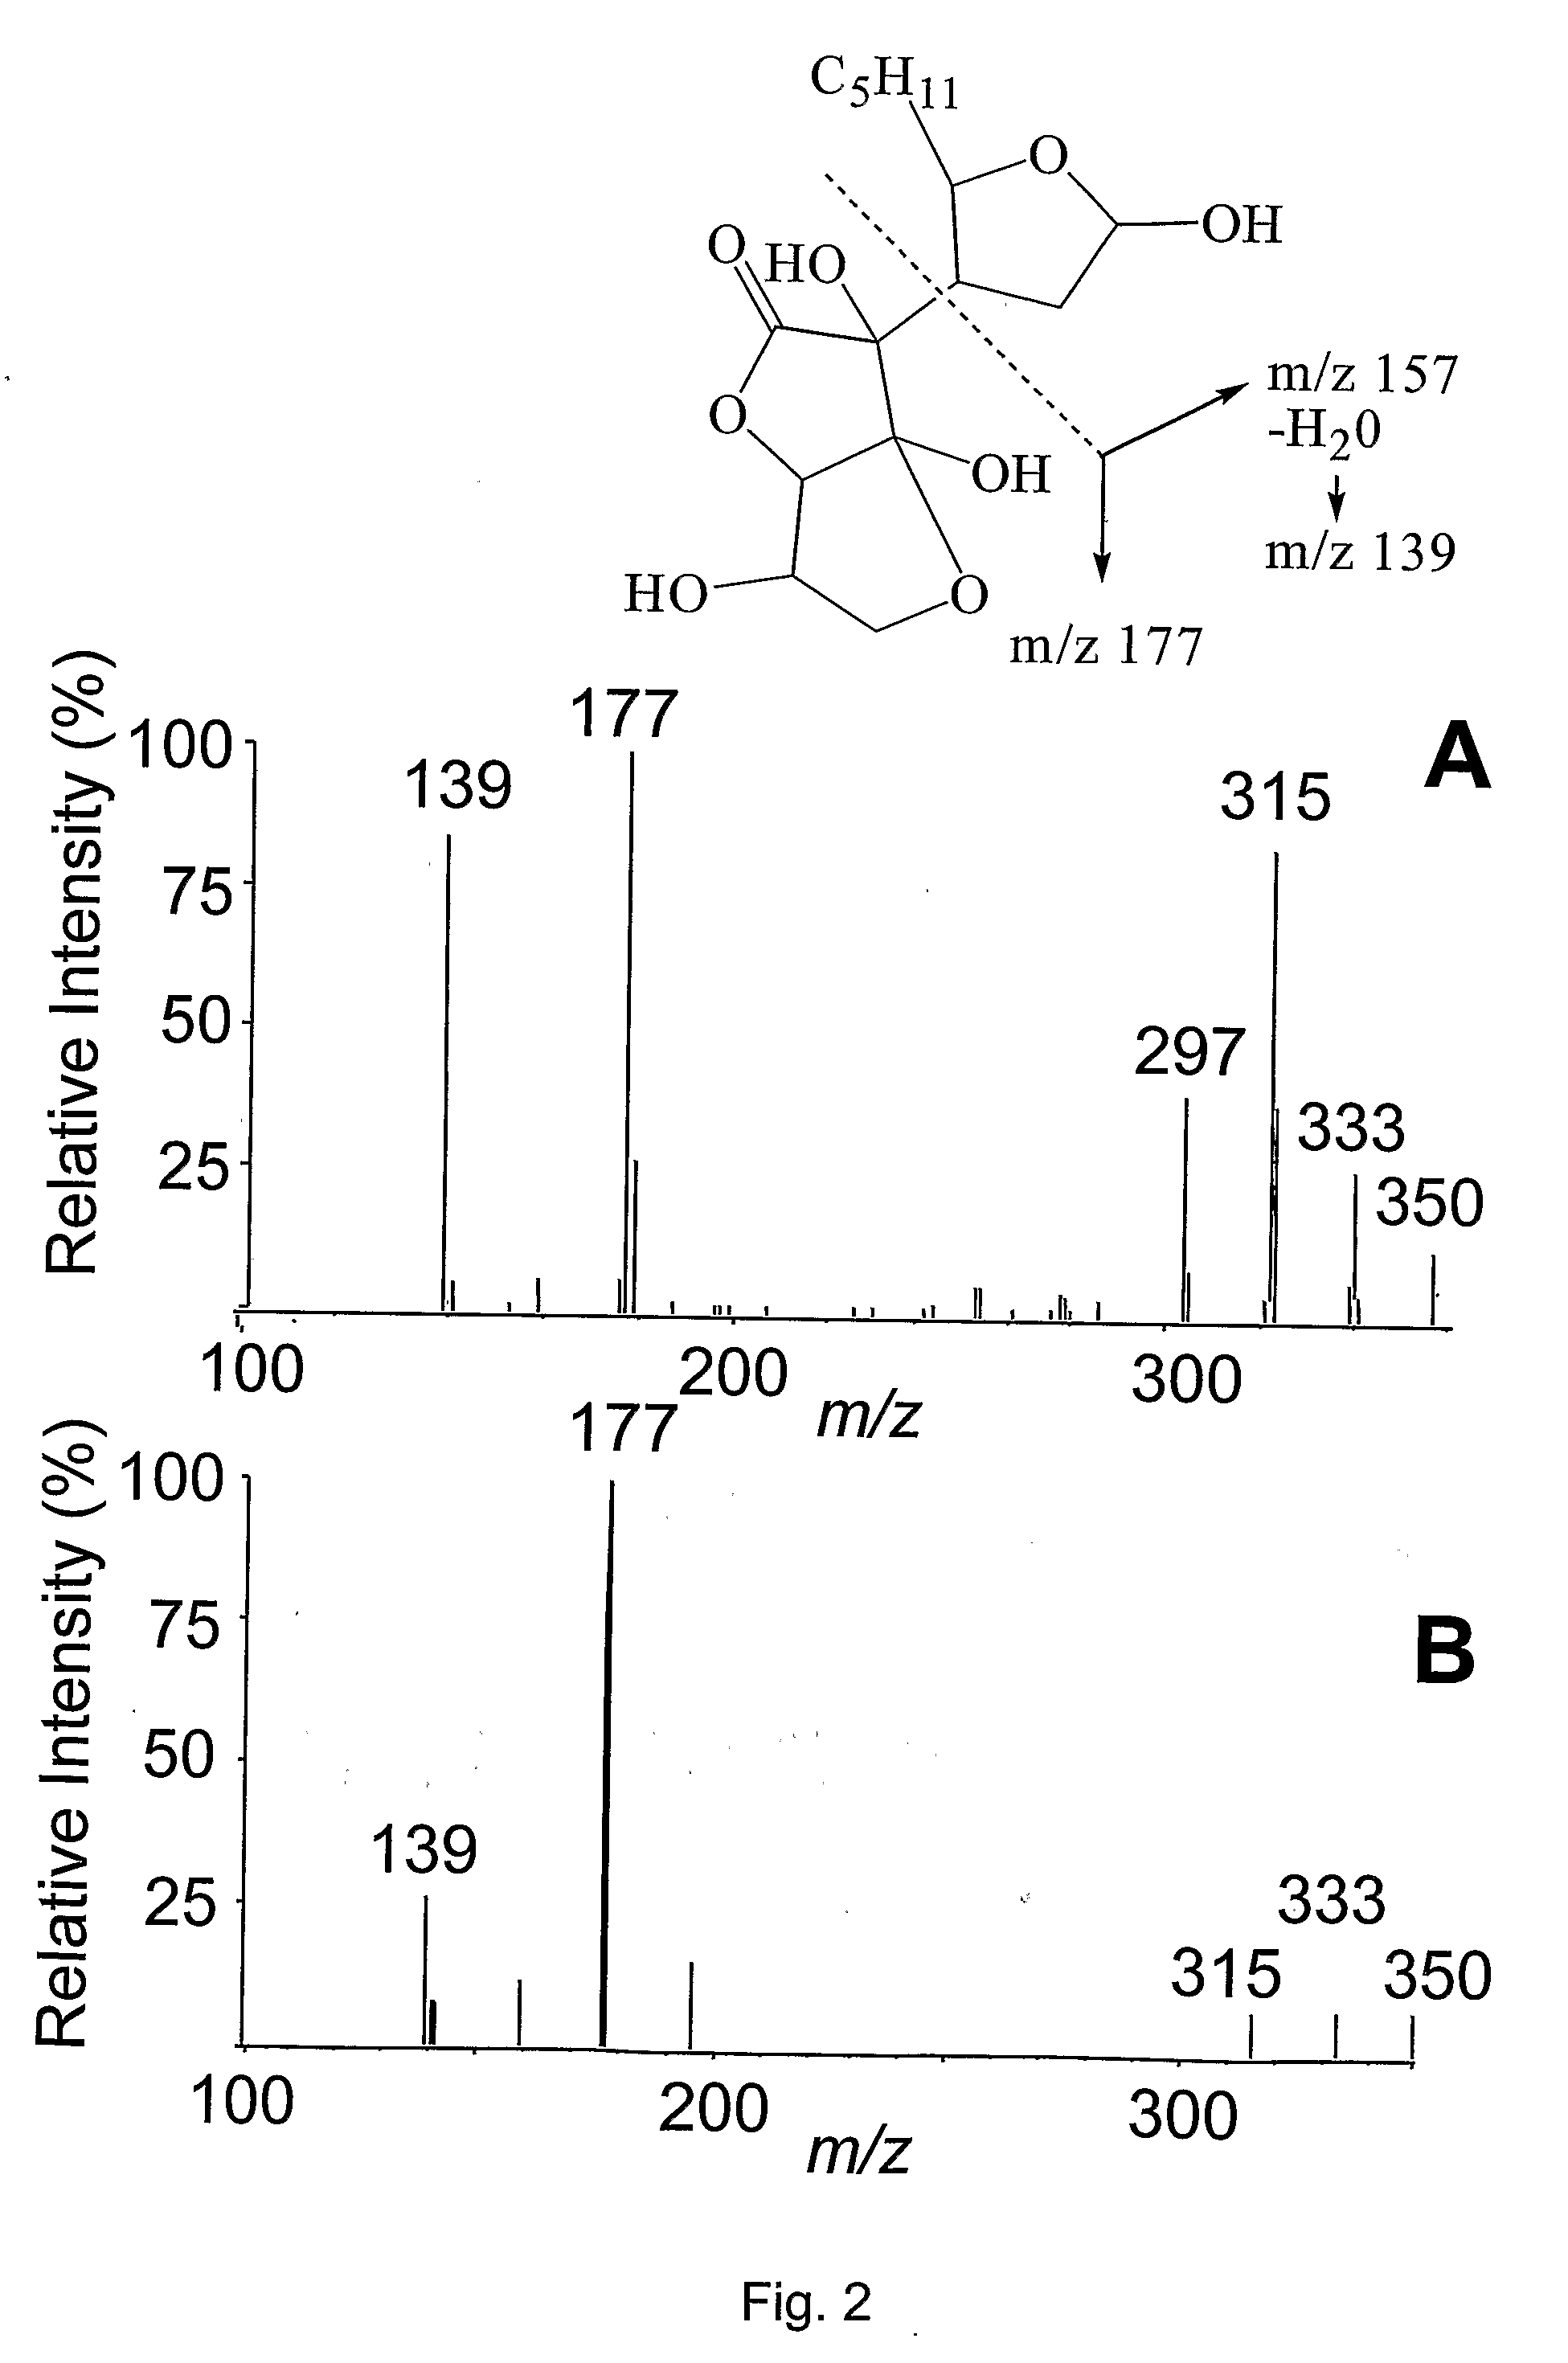 Ascorbic acid conjugates